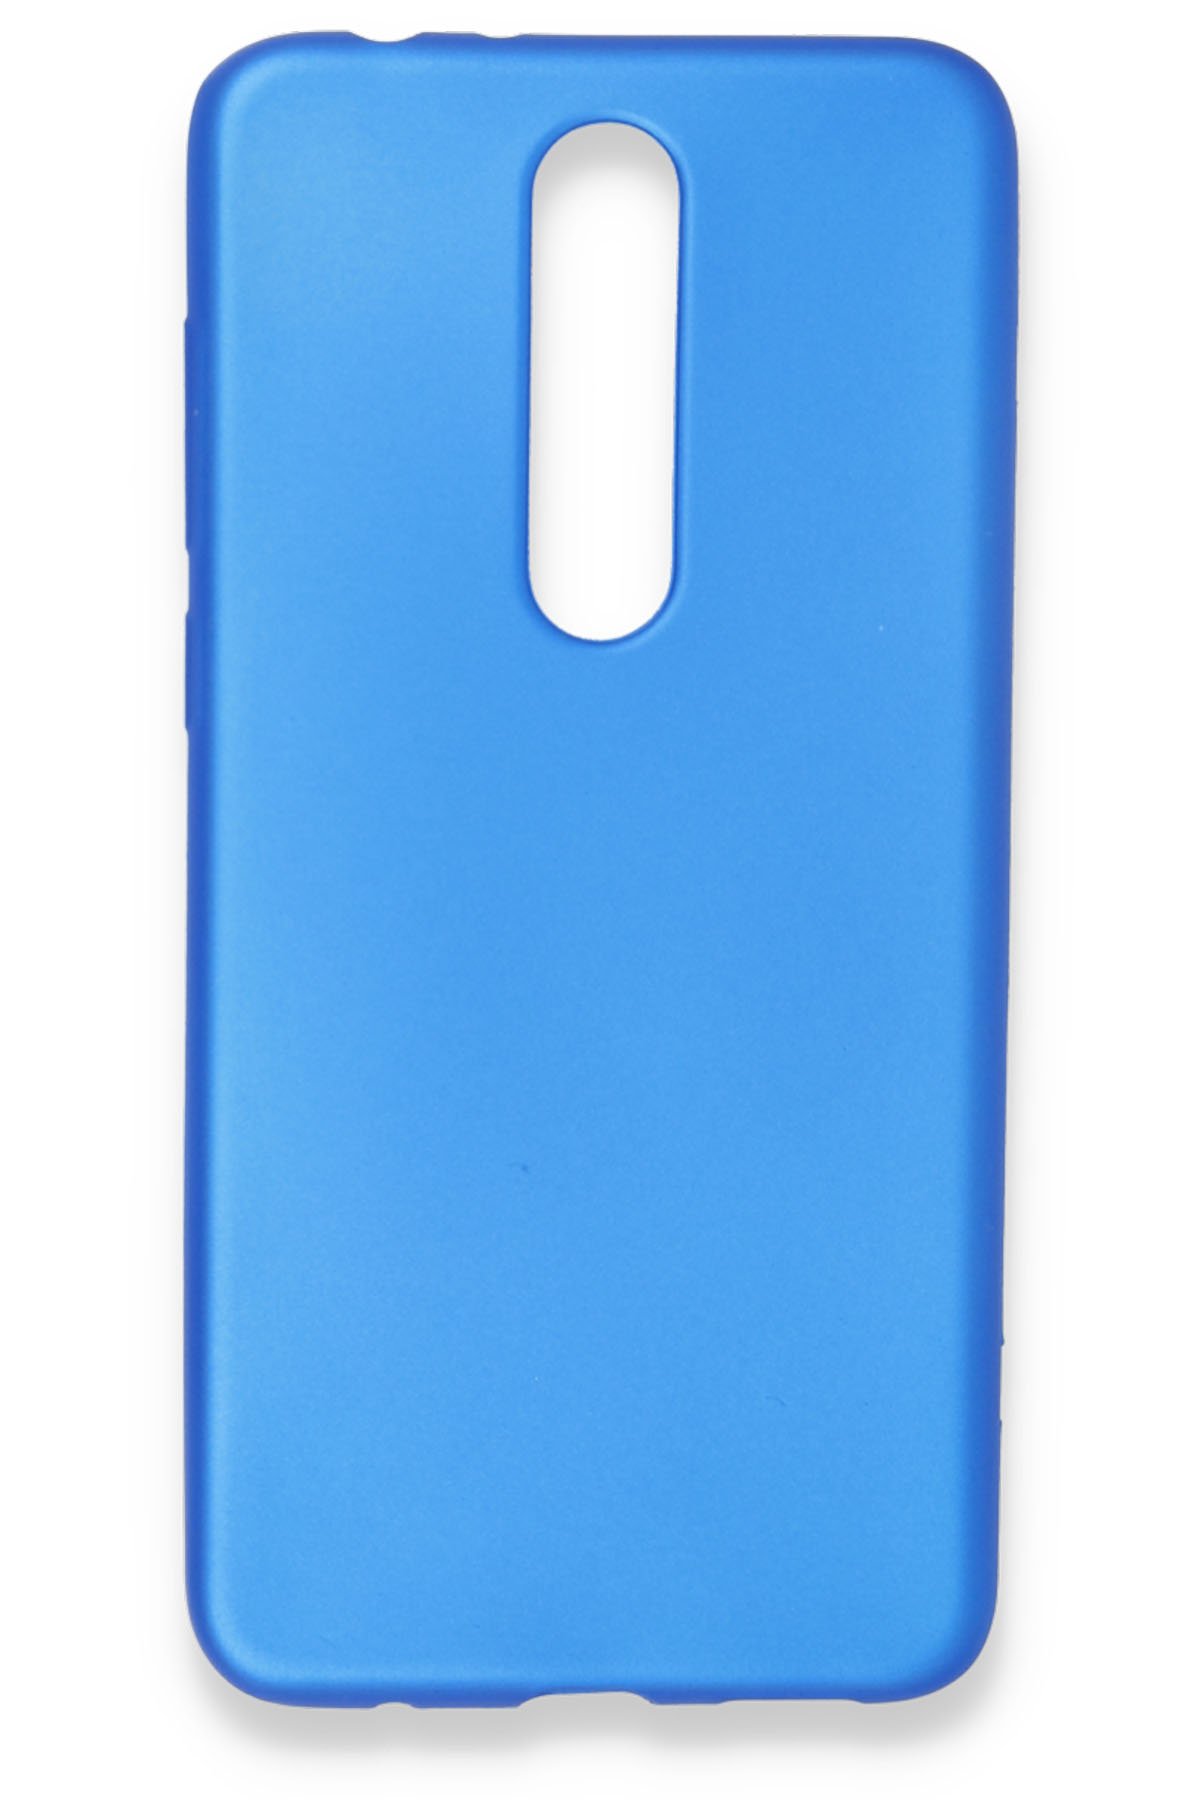 NewFace Newface Casper Via P3 Kılıf Premium Rubber Silikon - Mavi